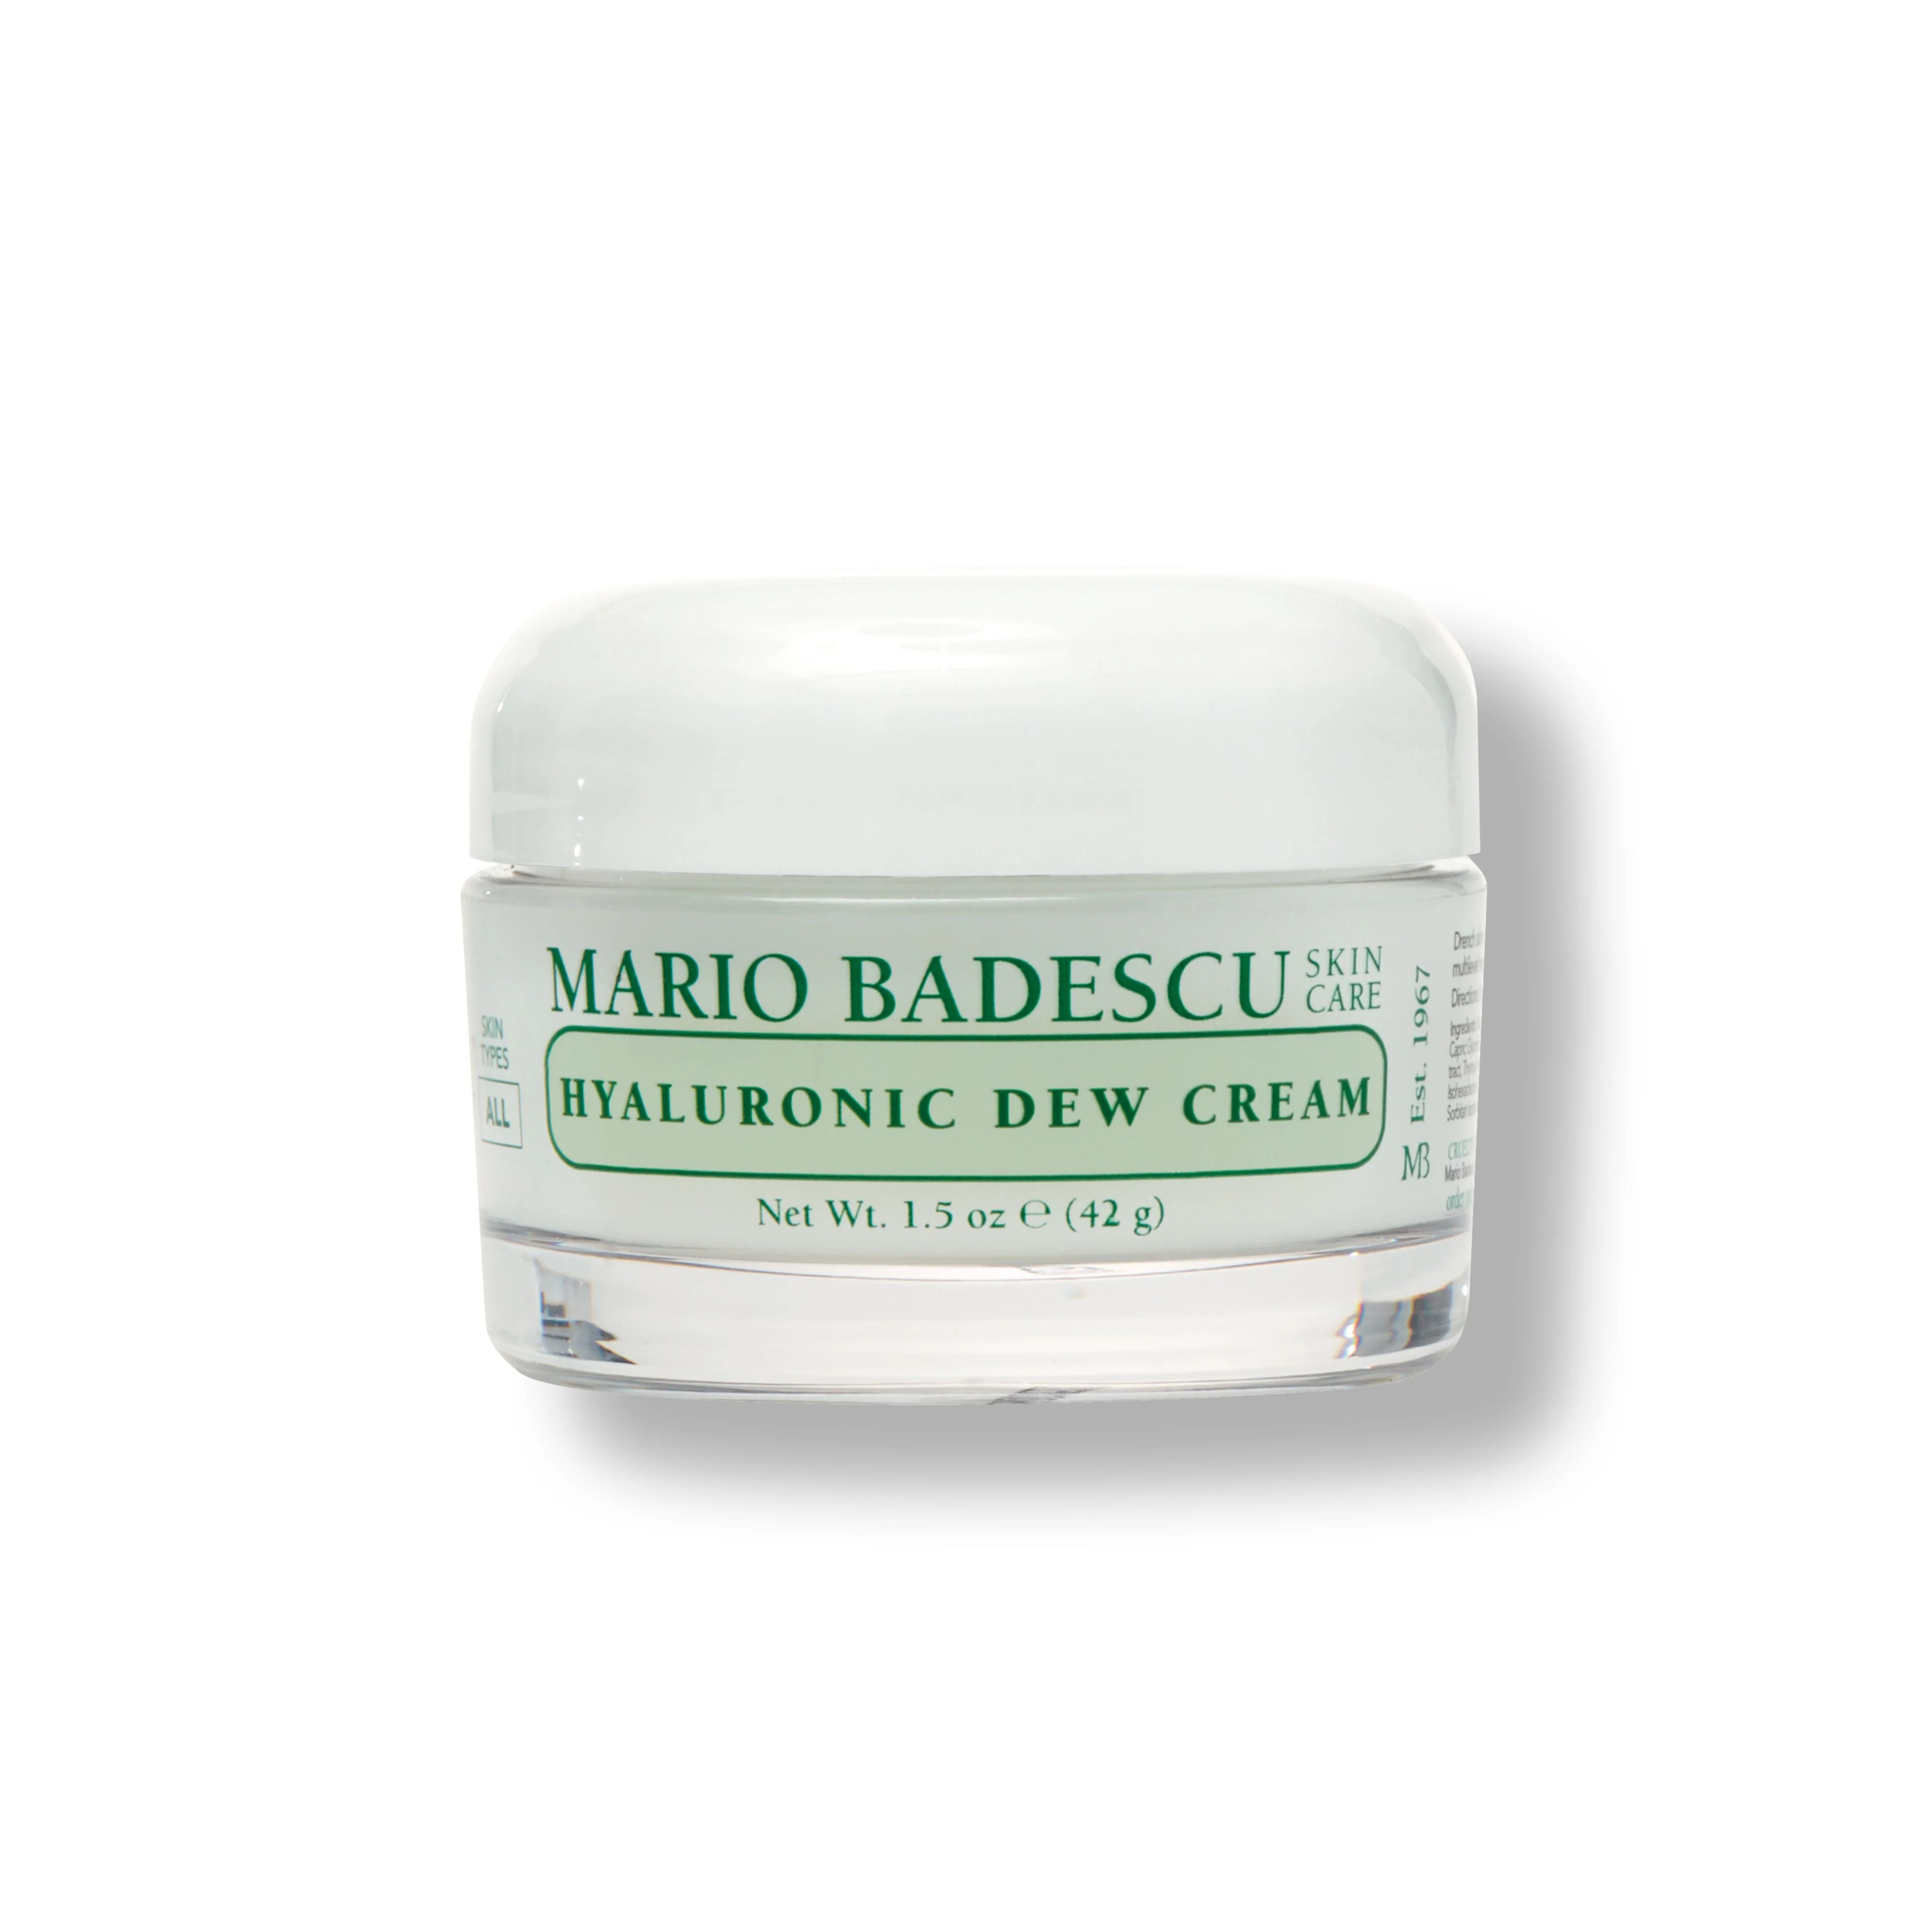 Hyaluronic Dew Cream - Dewy Skin | Mario Badescu | Mario Badescu